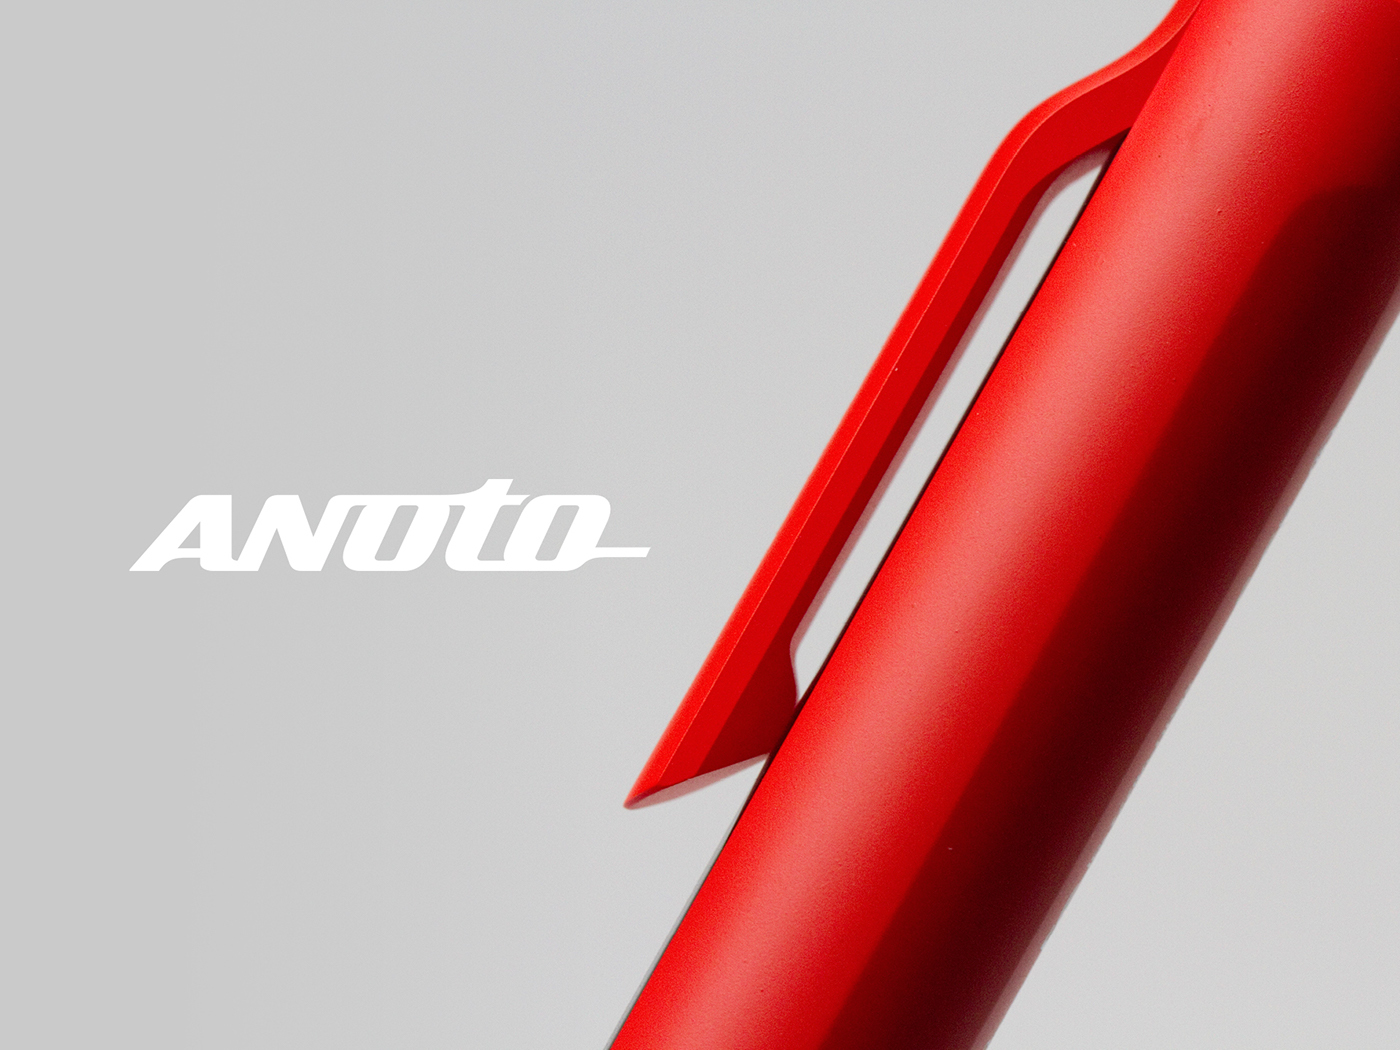 pen Anoto Technology Smart mnml minimal Scott Wilson industrial tough rugged